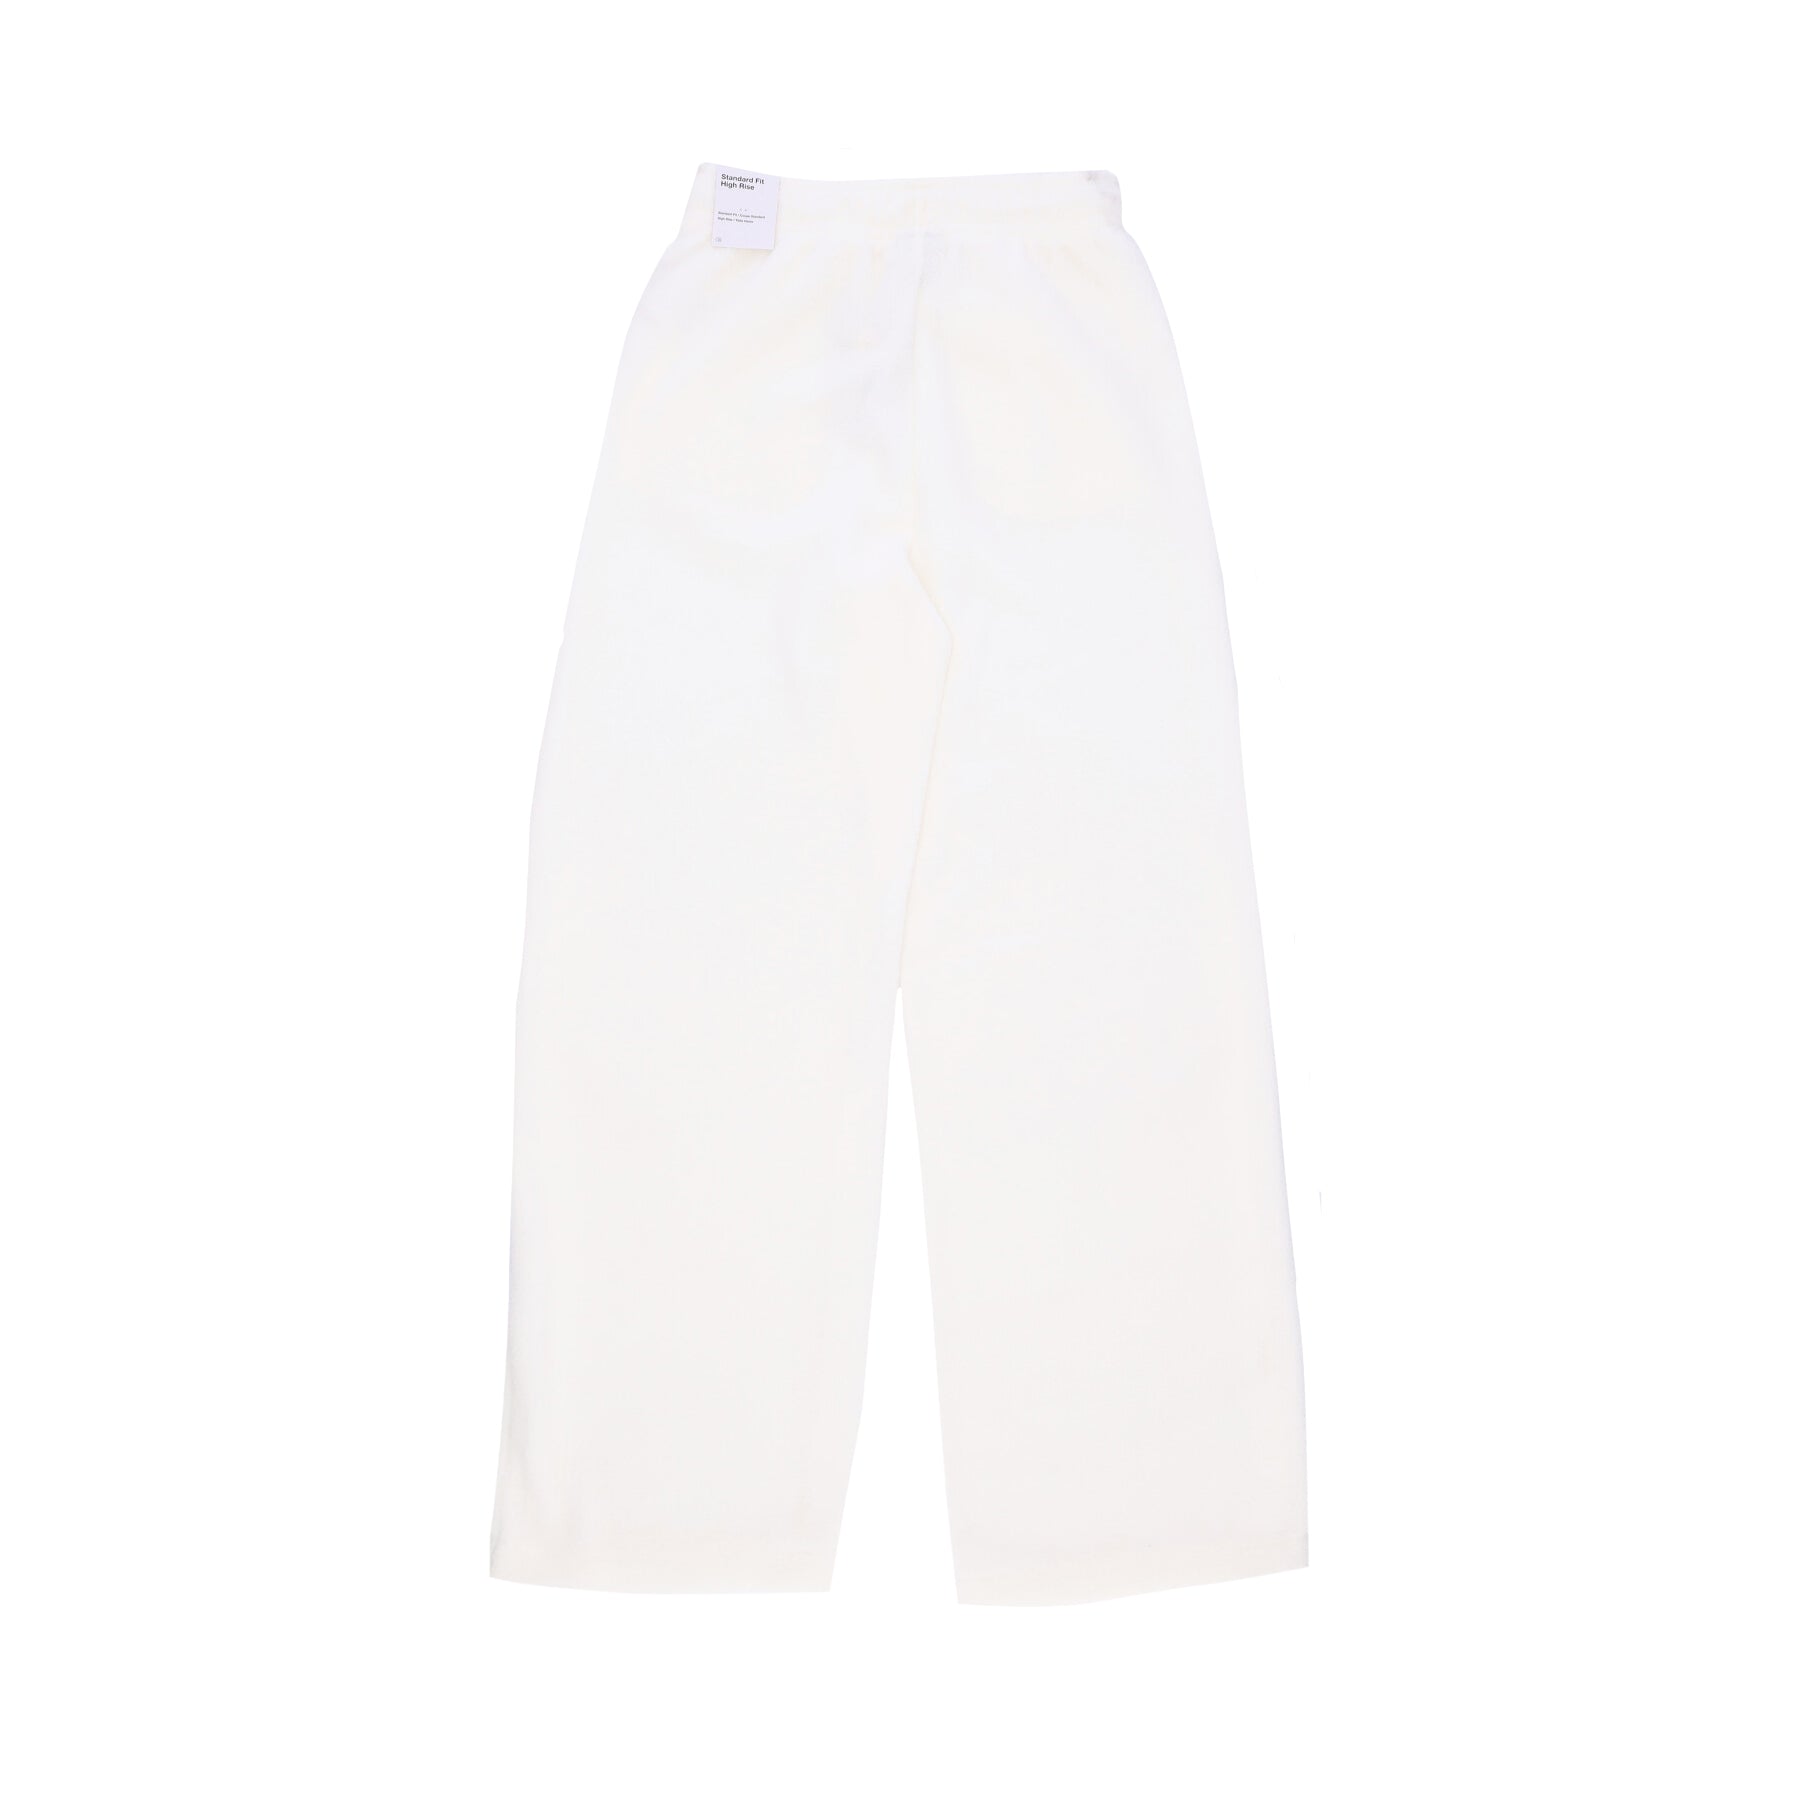 Orsetto Donna Sportswear Plush Pant Sail/sail DV4361-133